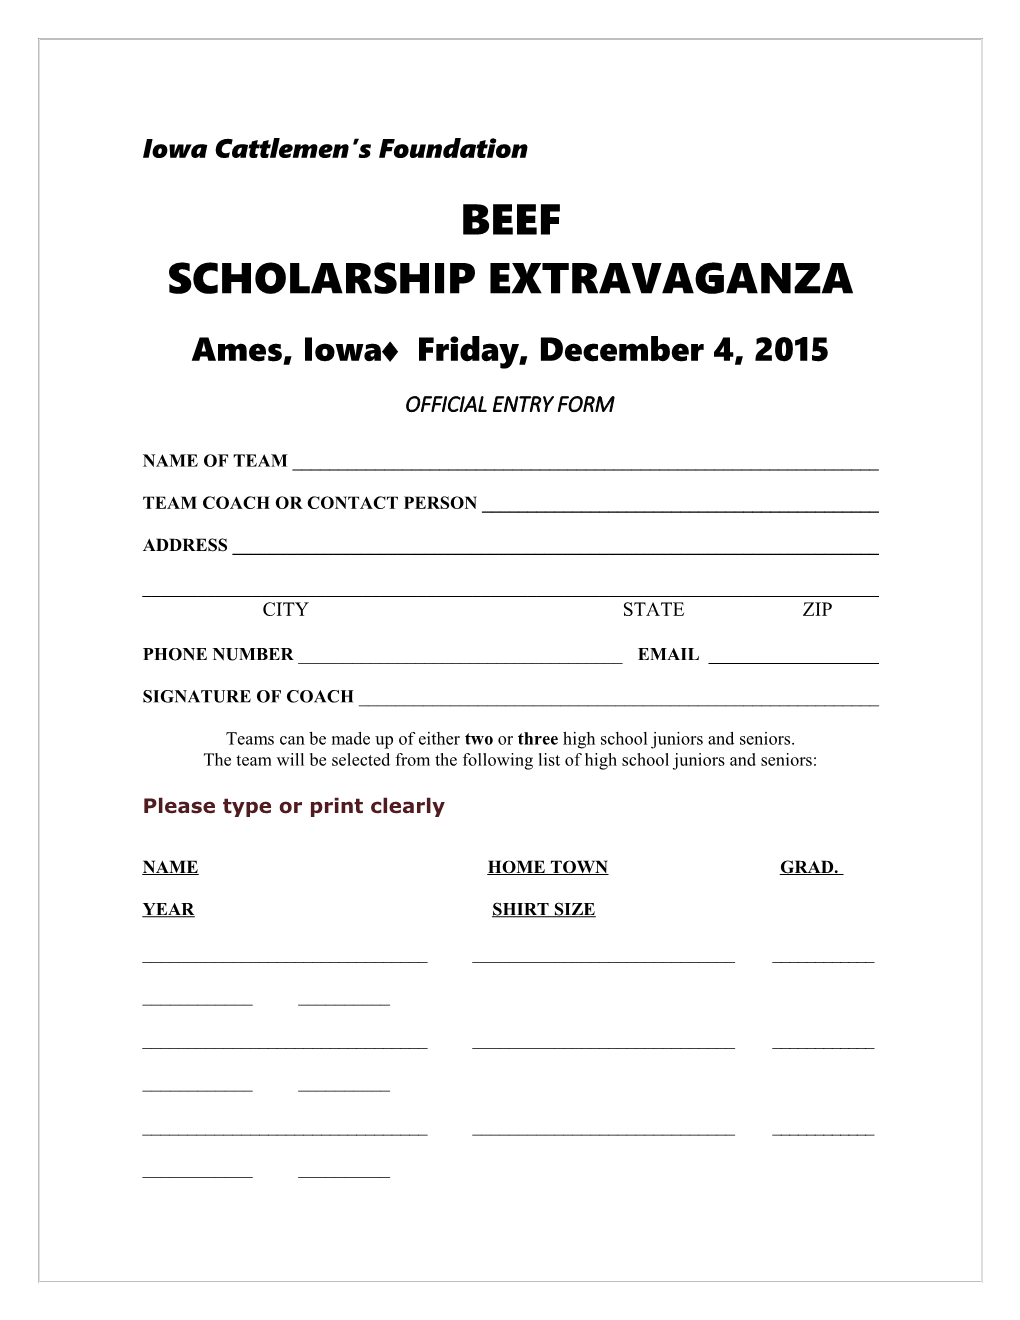 Beef Scholarship Extravaganza - Friday, March 18, 2011